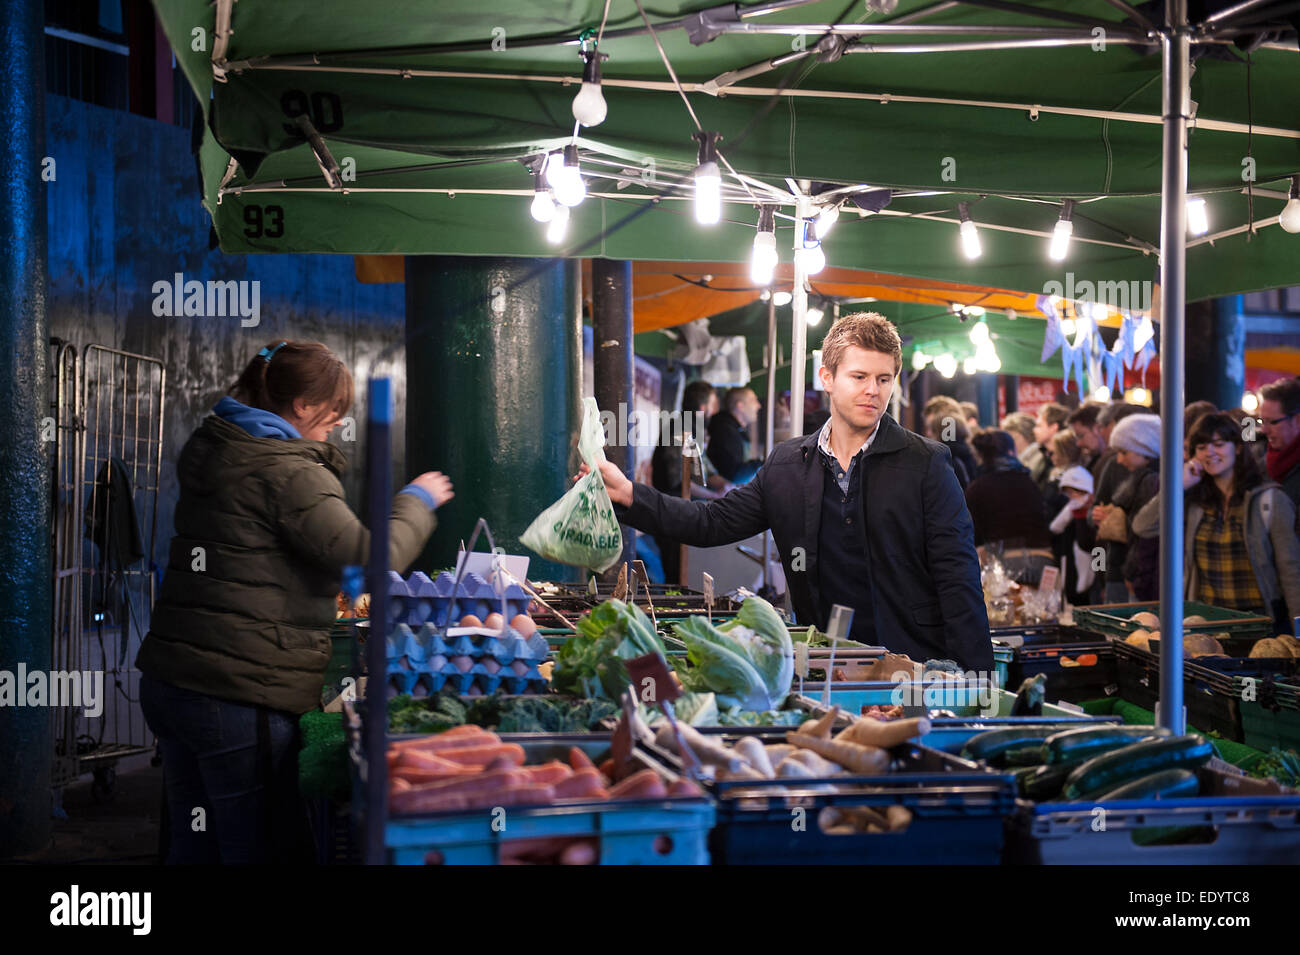 Borough market london. credit: LEE RAMSDEN / ALAMY Stock Photo